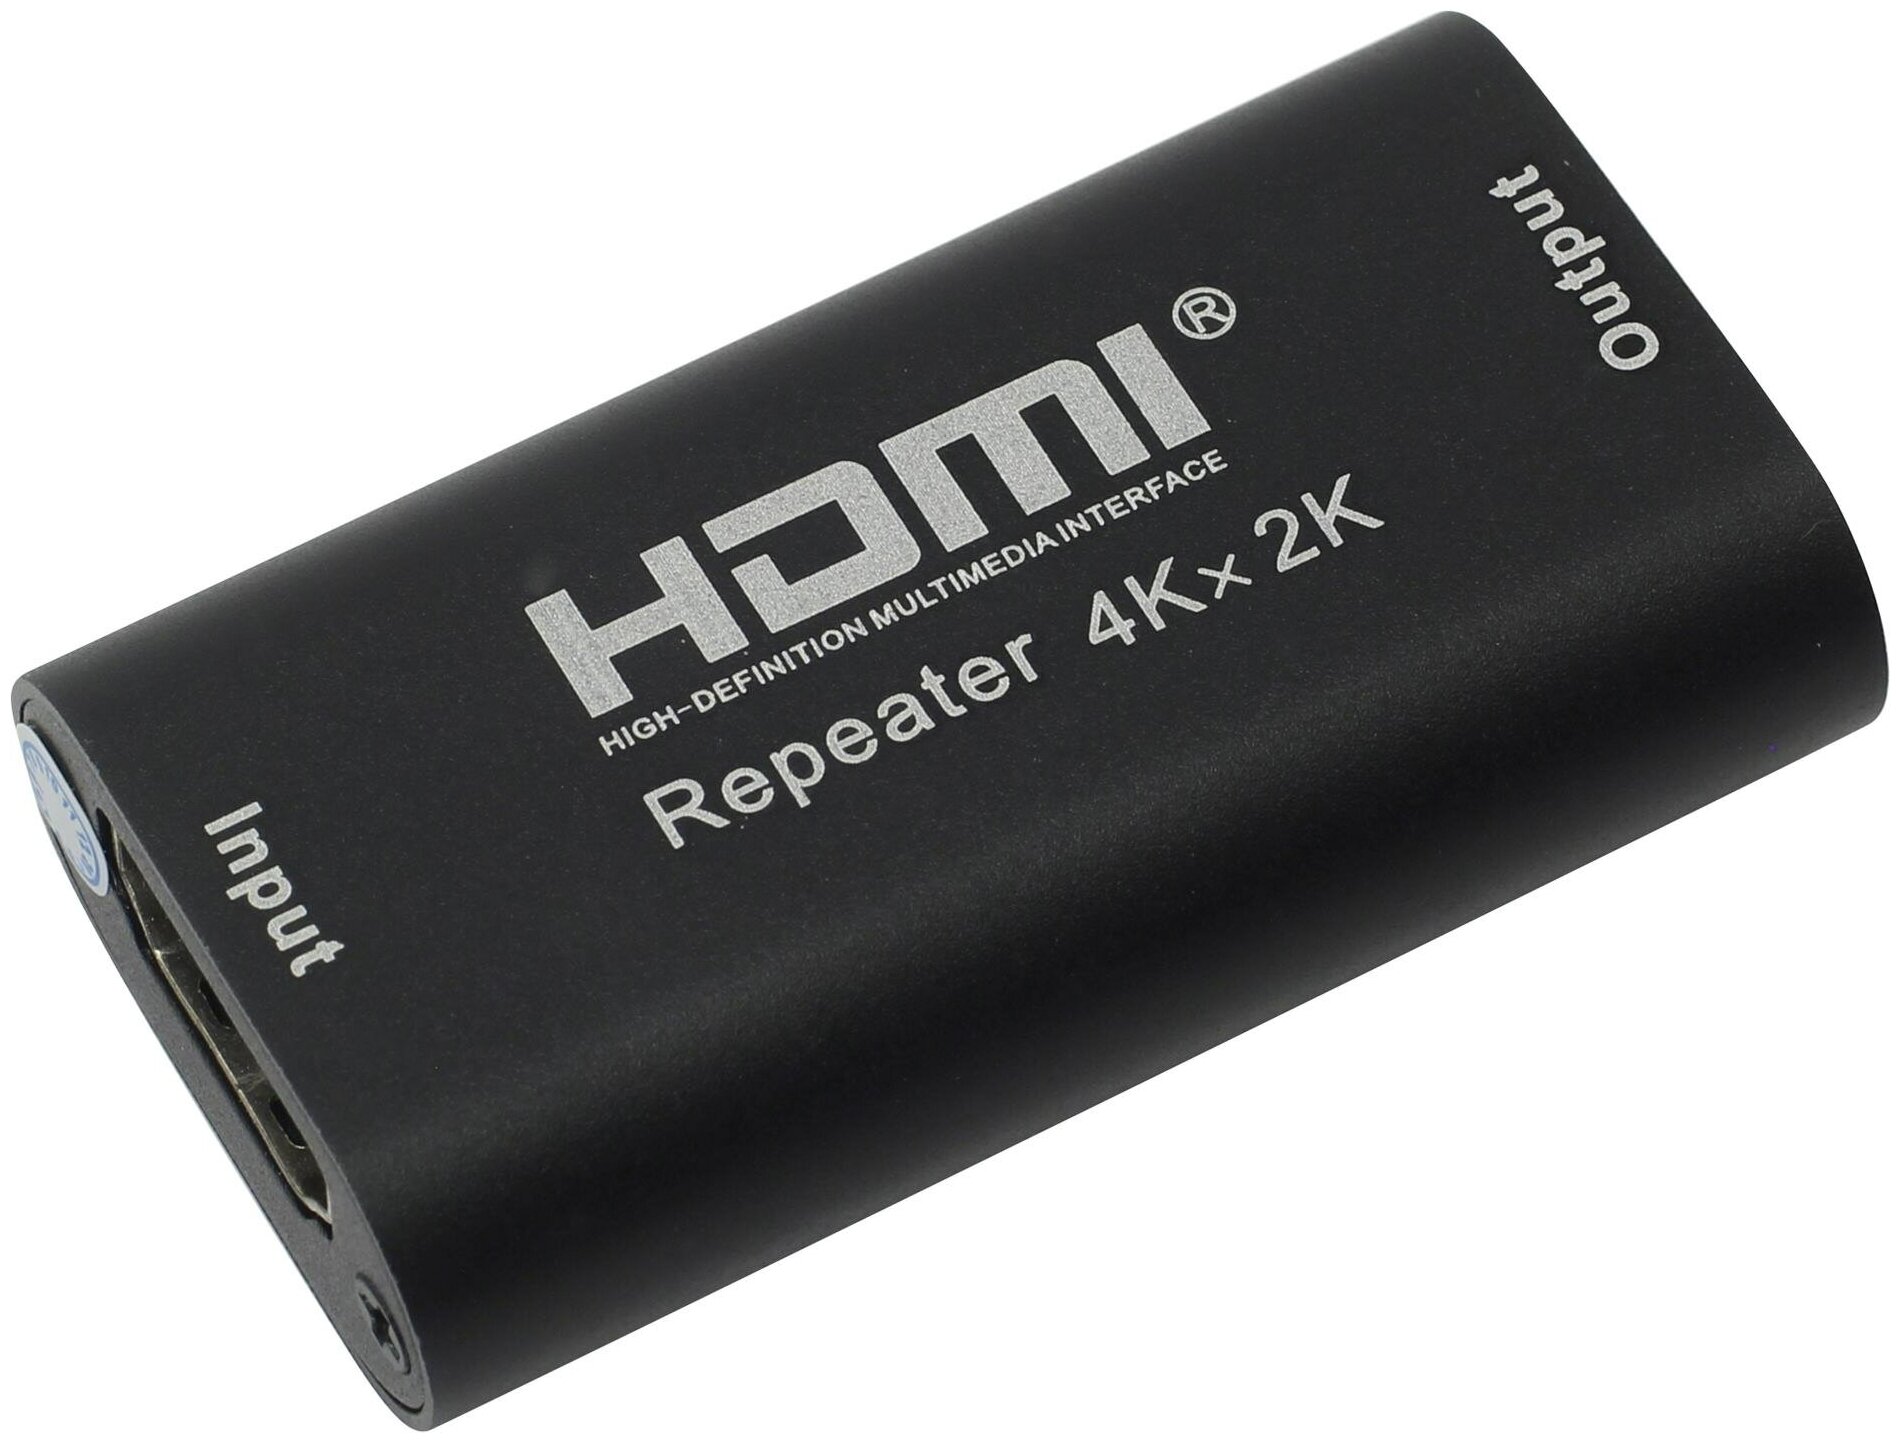 ORIENT VE020, HDMI 1.4 репитер, усилитель сигнала 1920x1080@60Hz до 40м, 4K@30Hz до 20м, HDMI F - HDMI F, не требуется внешнее питание (31032)